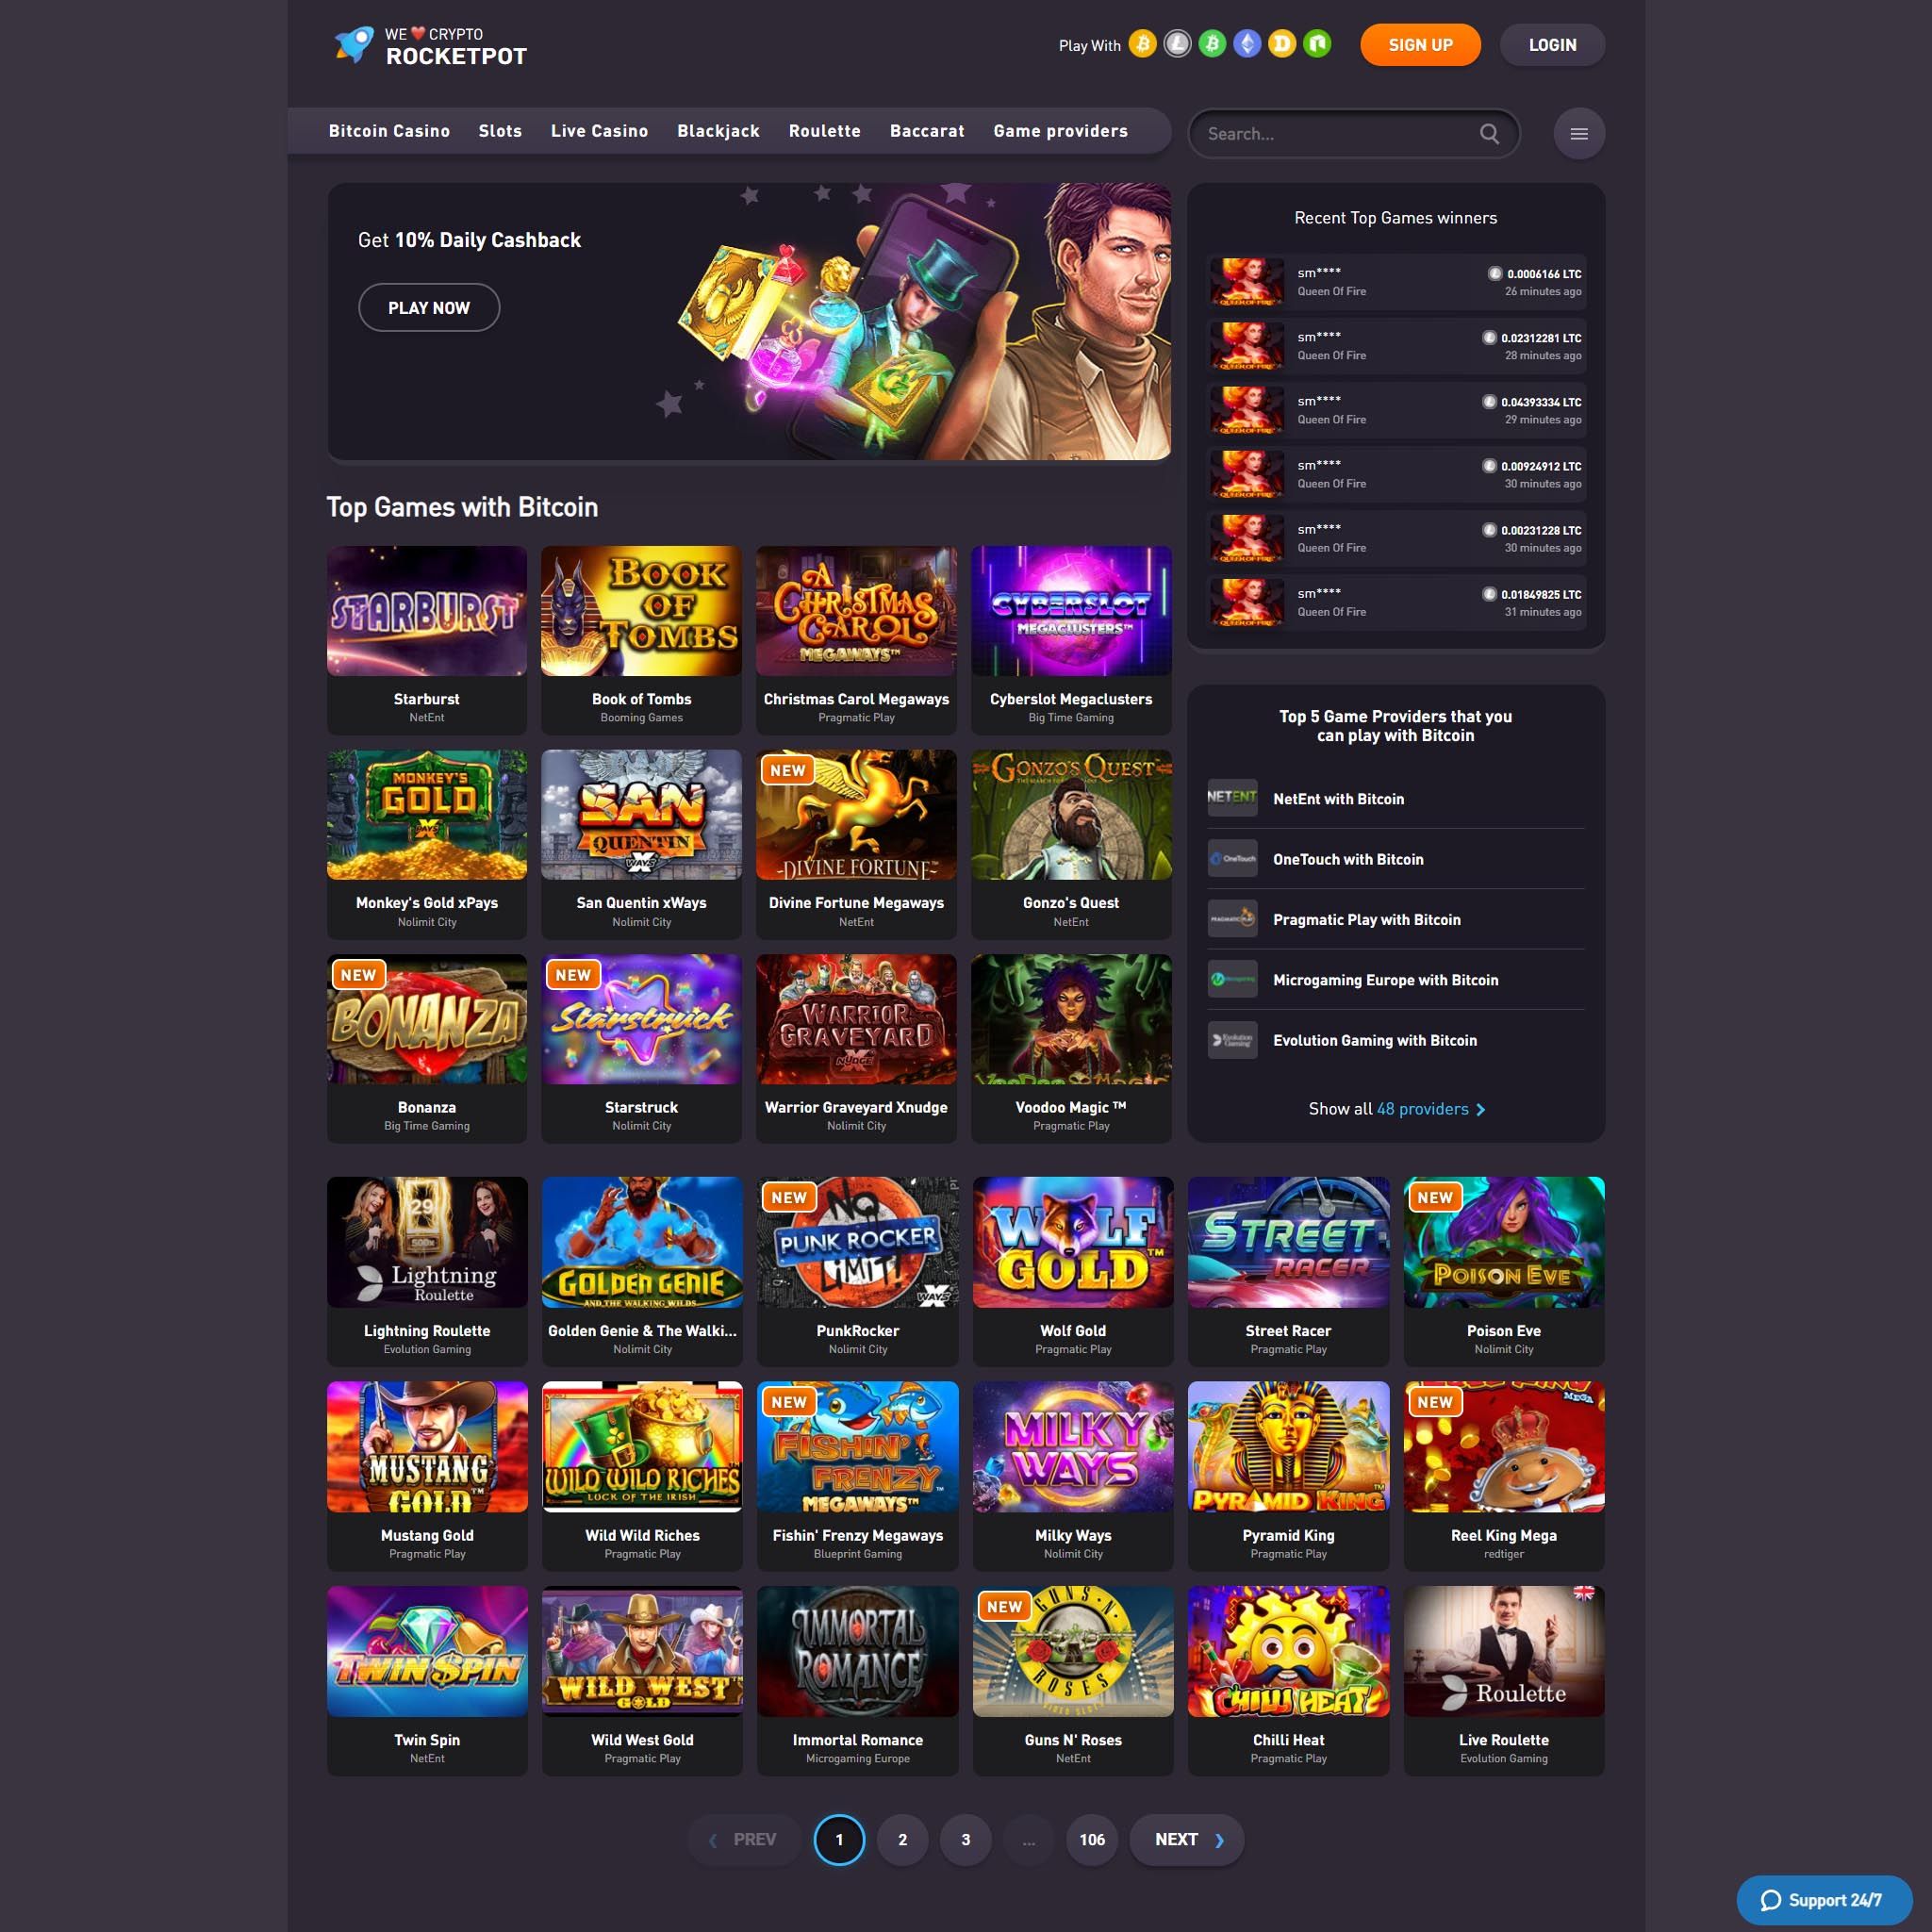 Rocketpot Casino full games catalogue